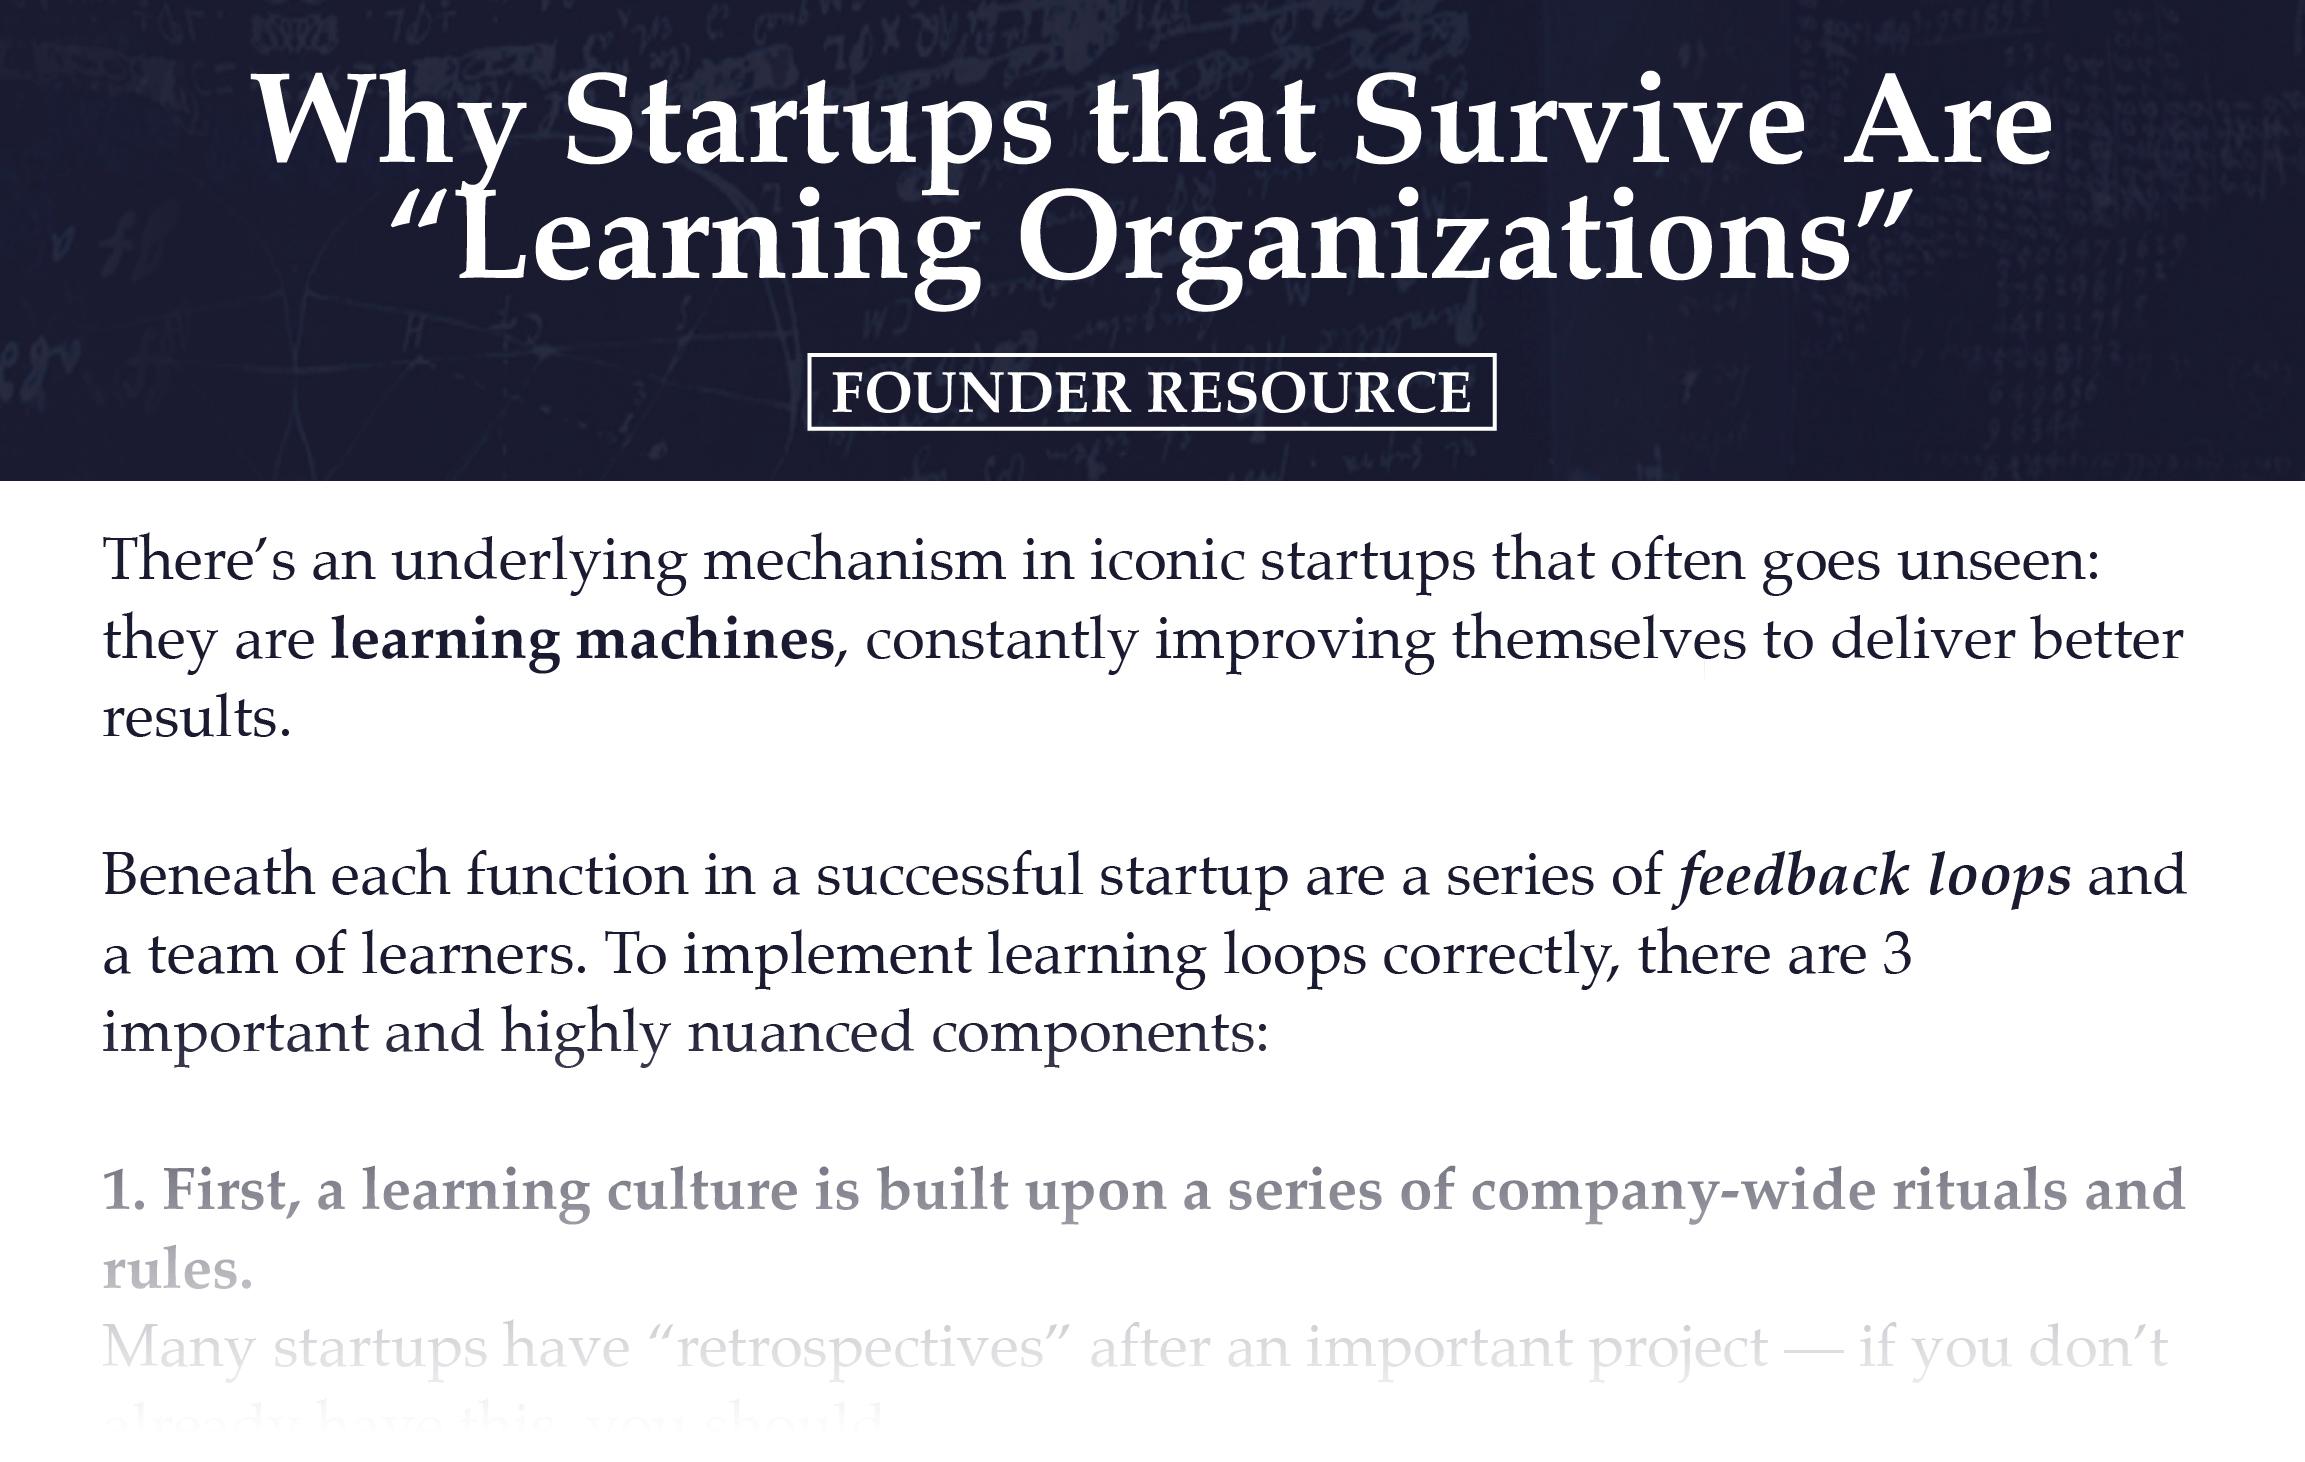 Startups Learning Organizations